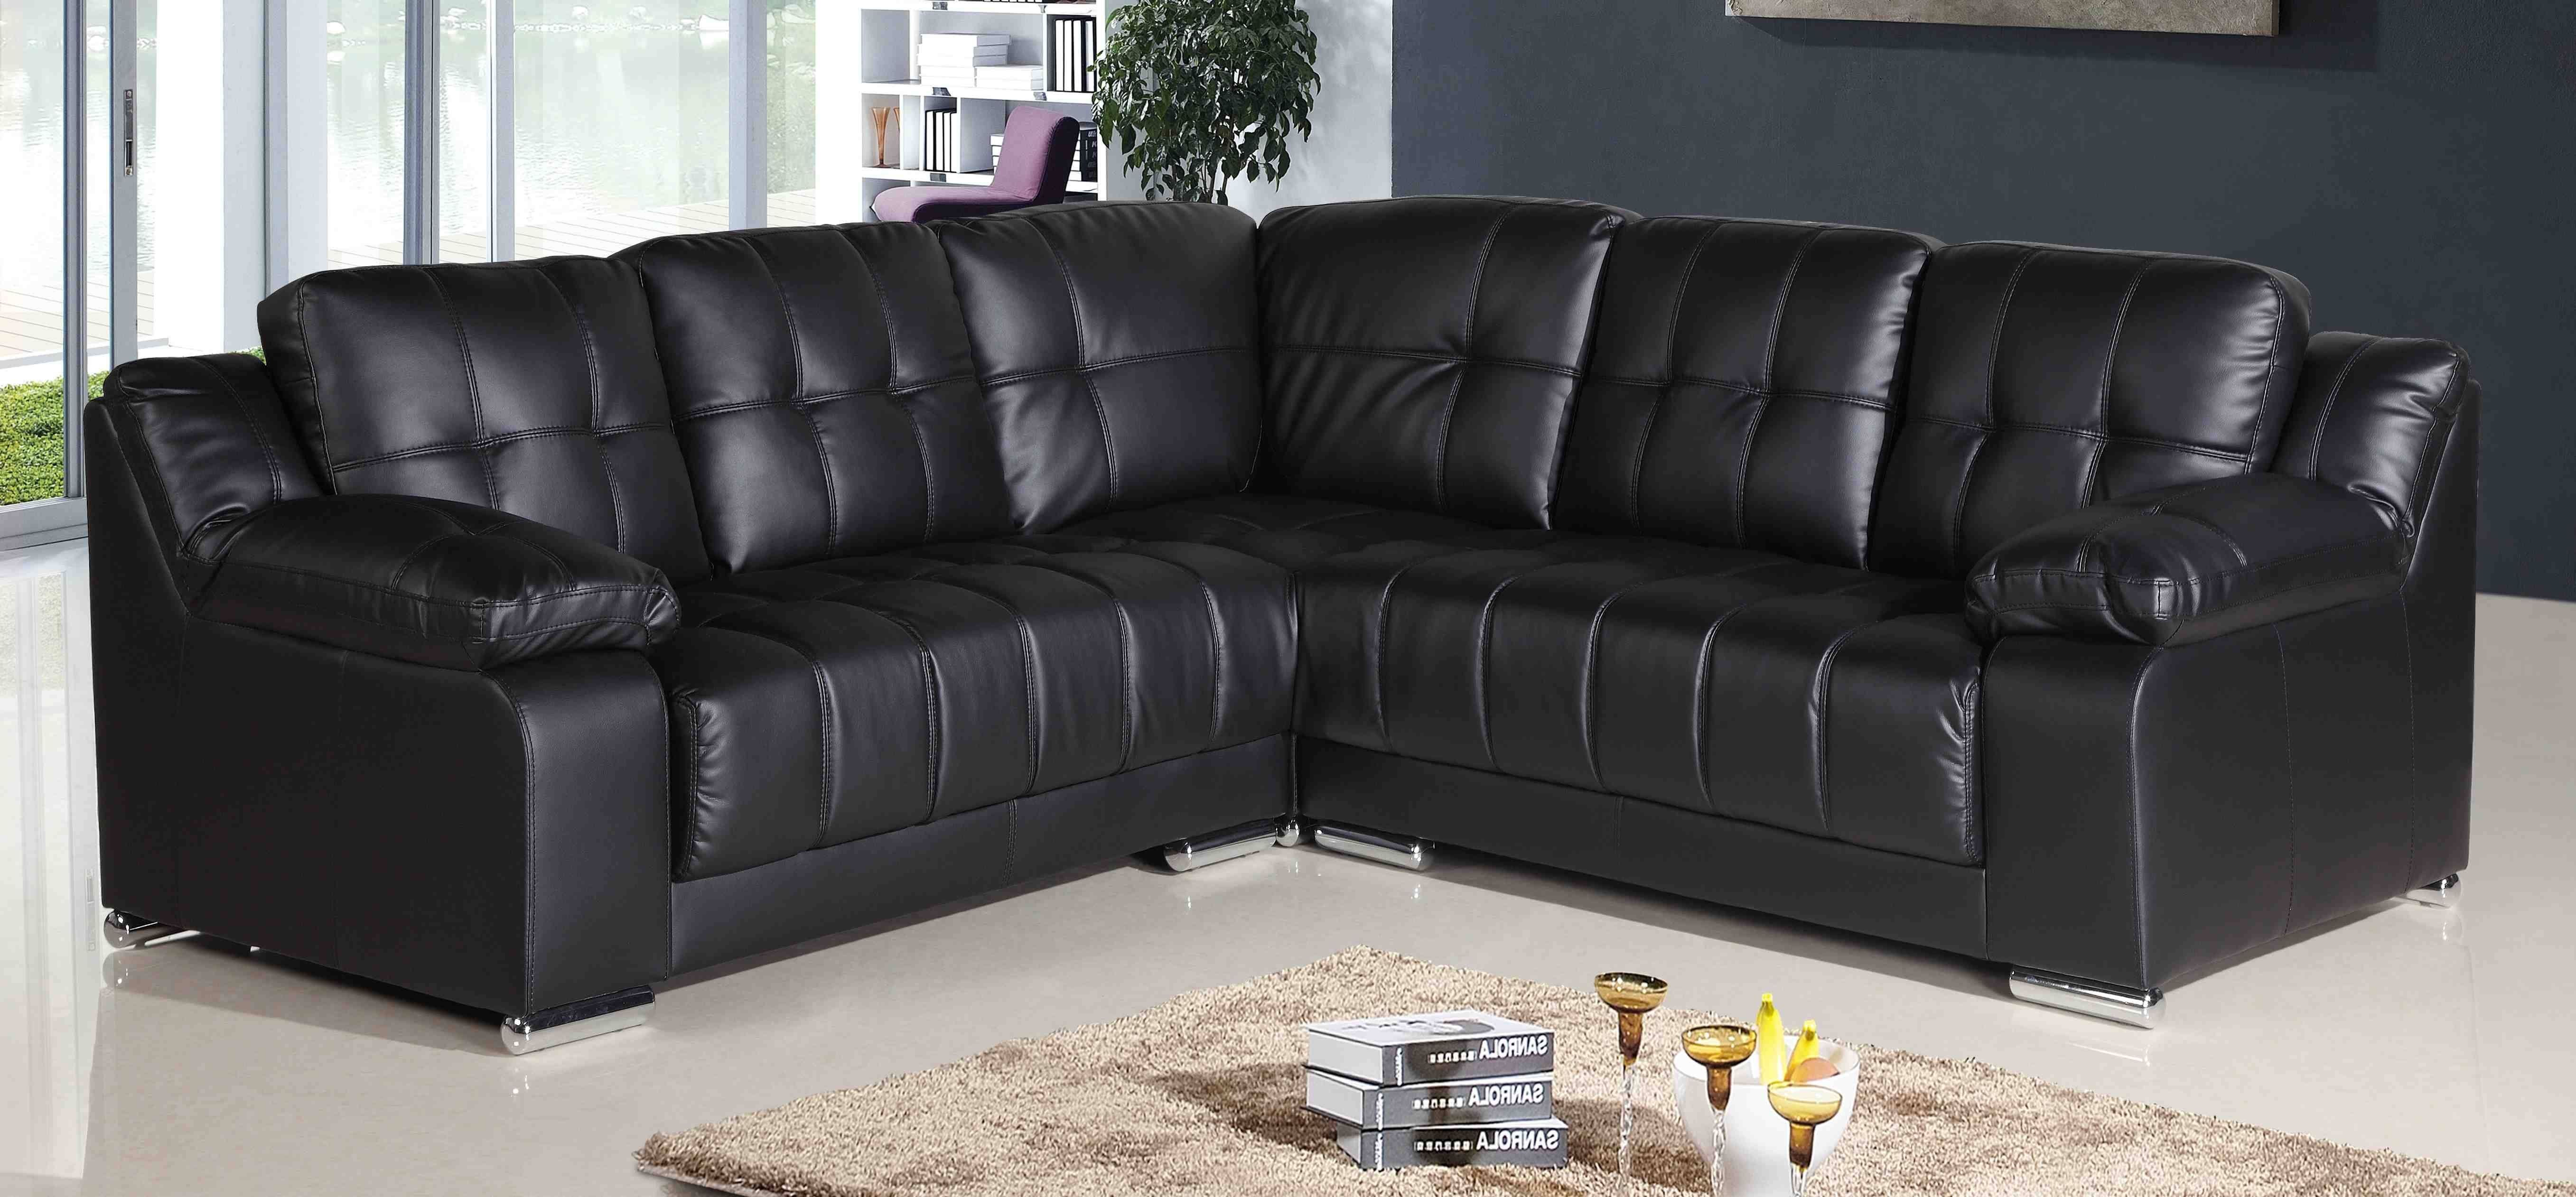 cheap black leather corner sofa for sale